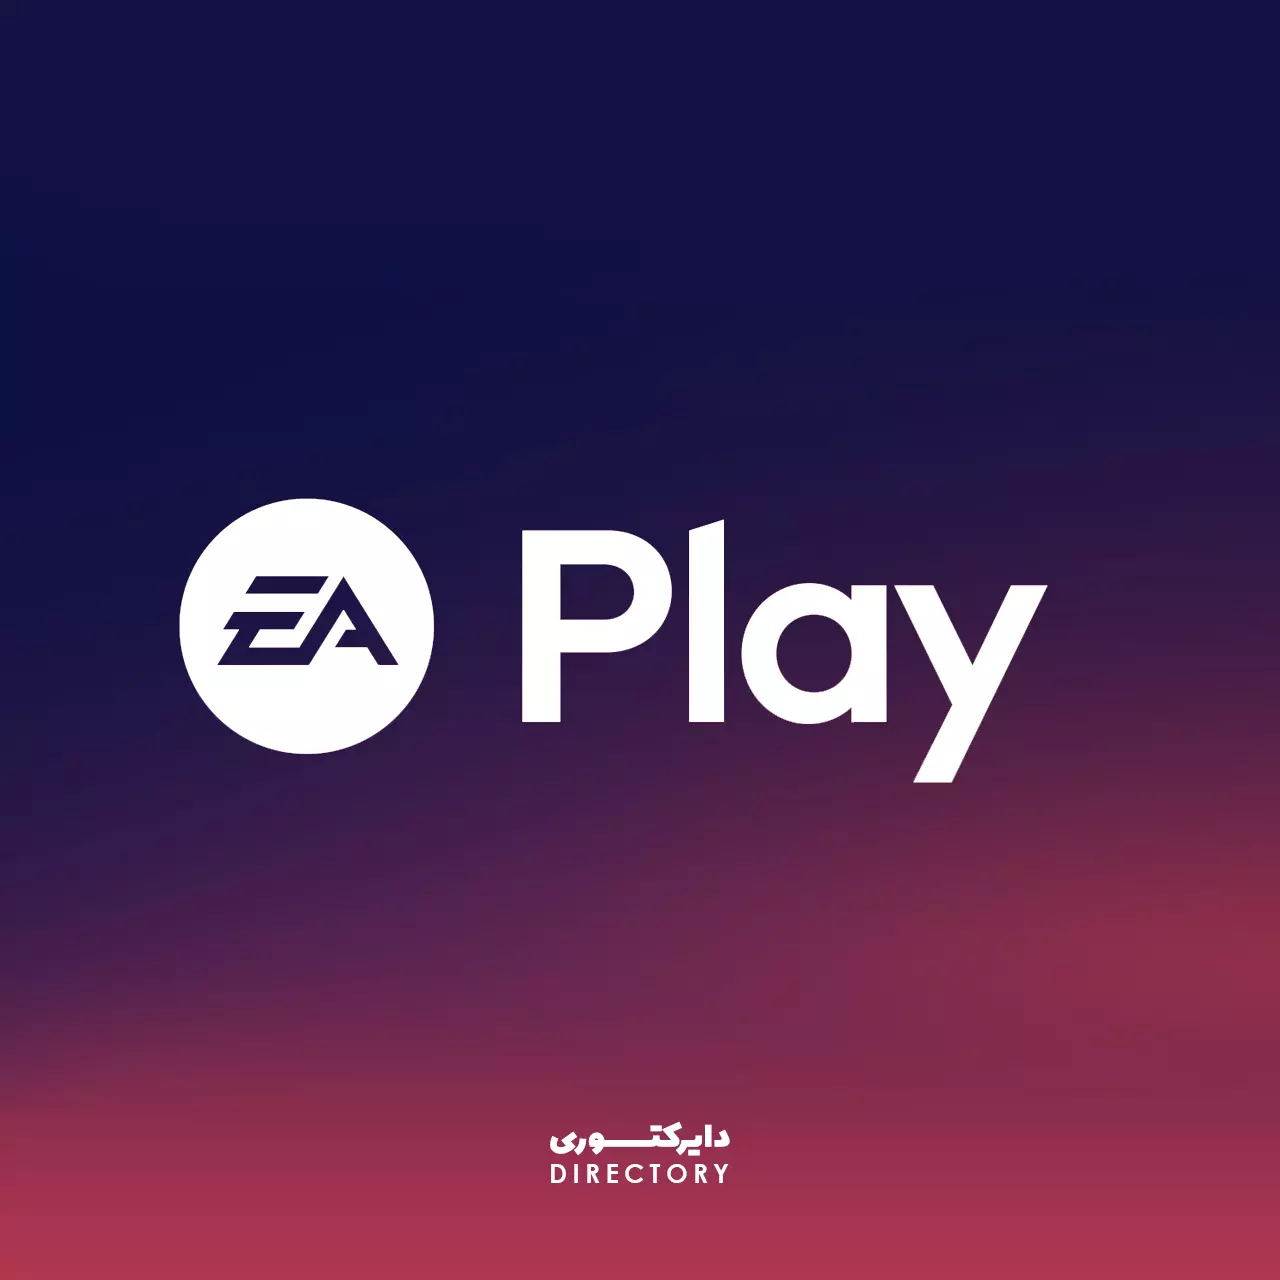 اشتراک EA Play